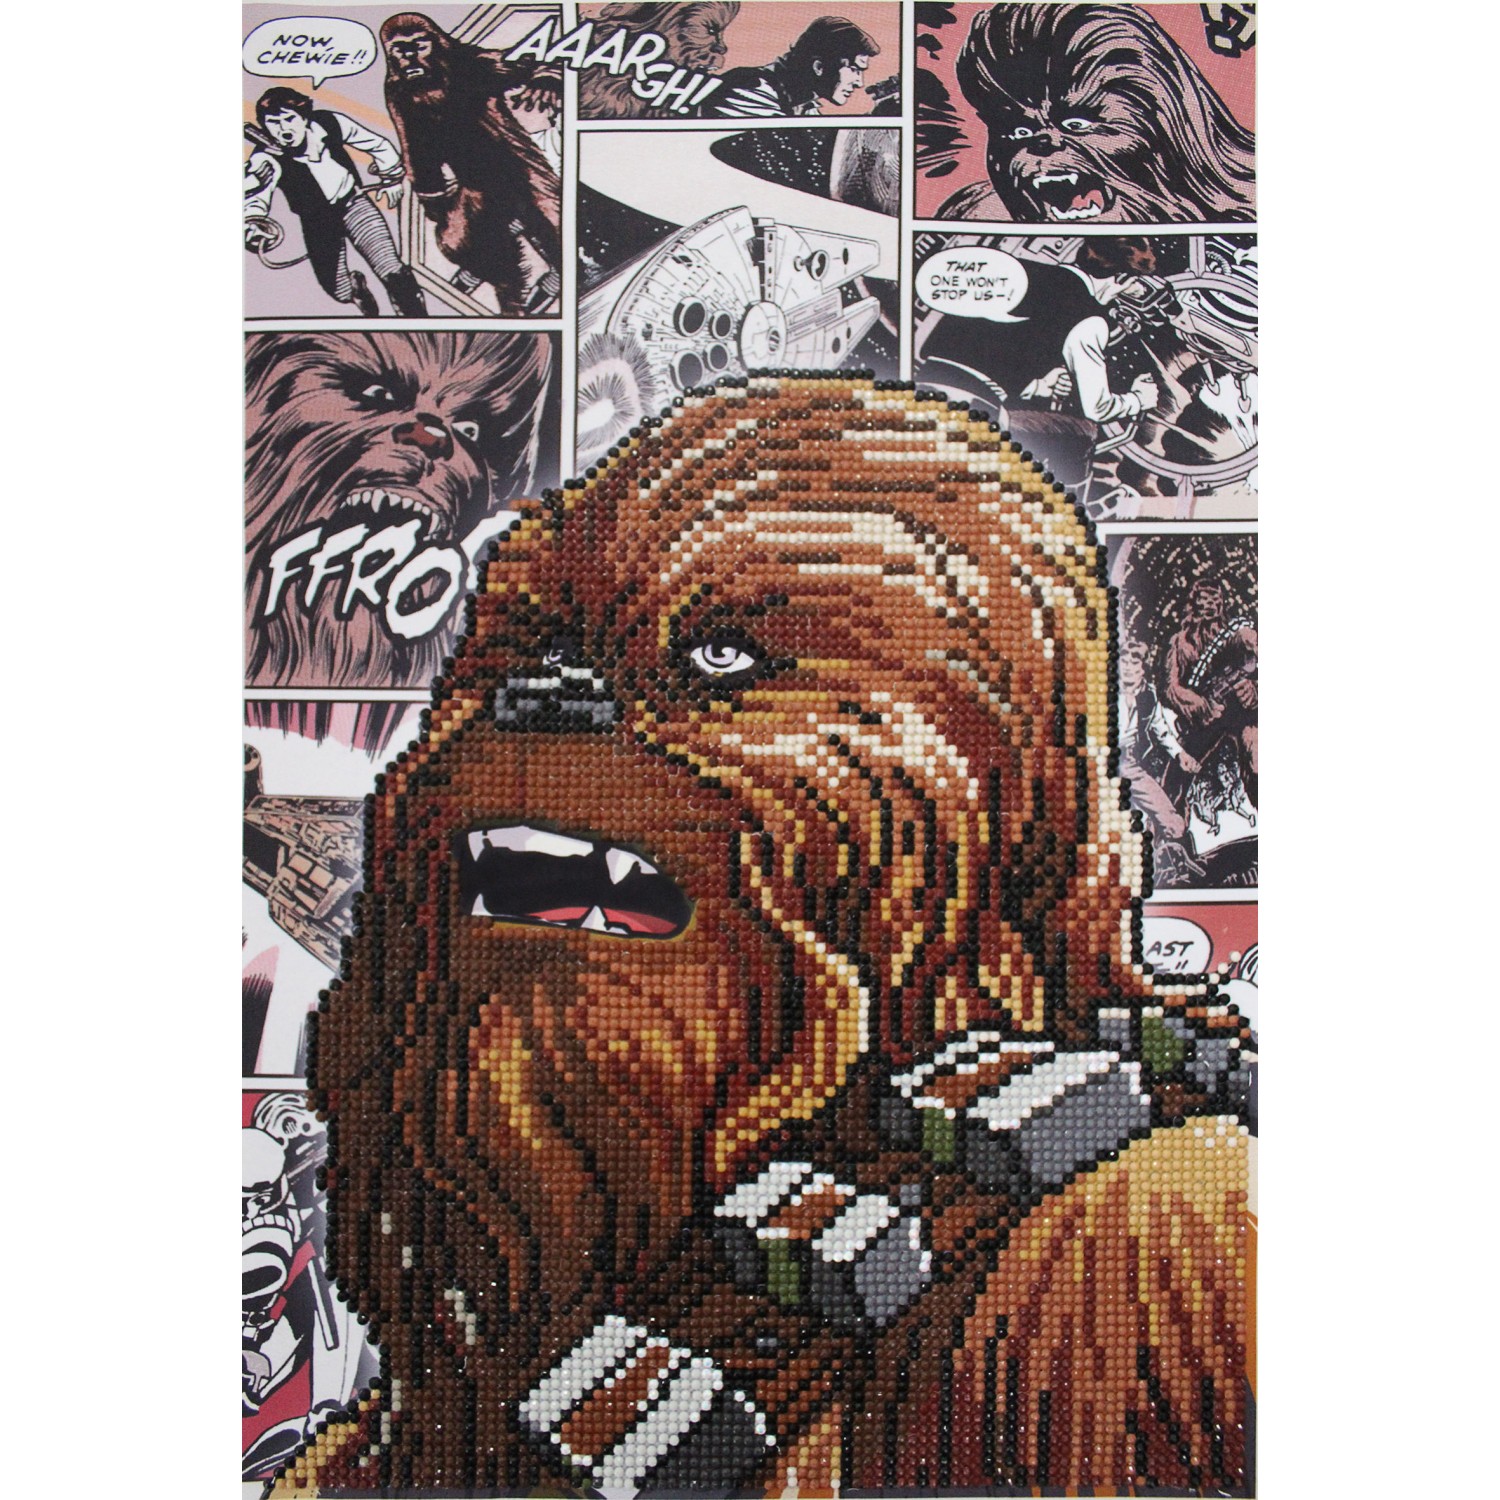 Aesthetic Chewbacca Star Wars 2 - 5D Diamond Painting 